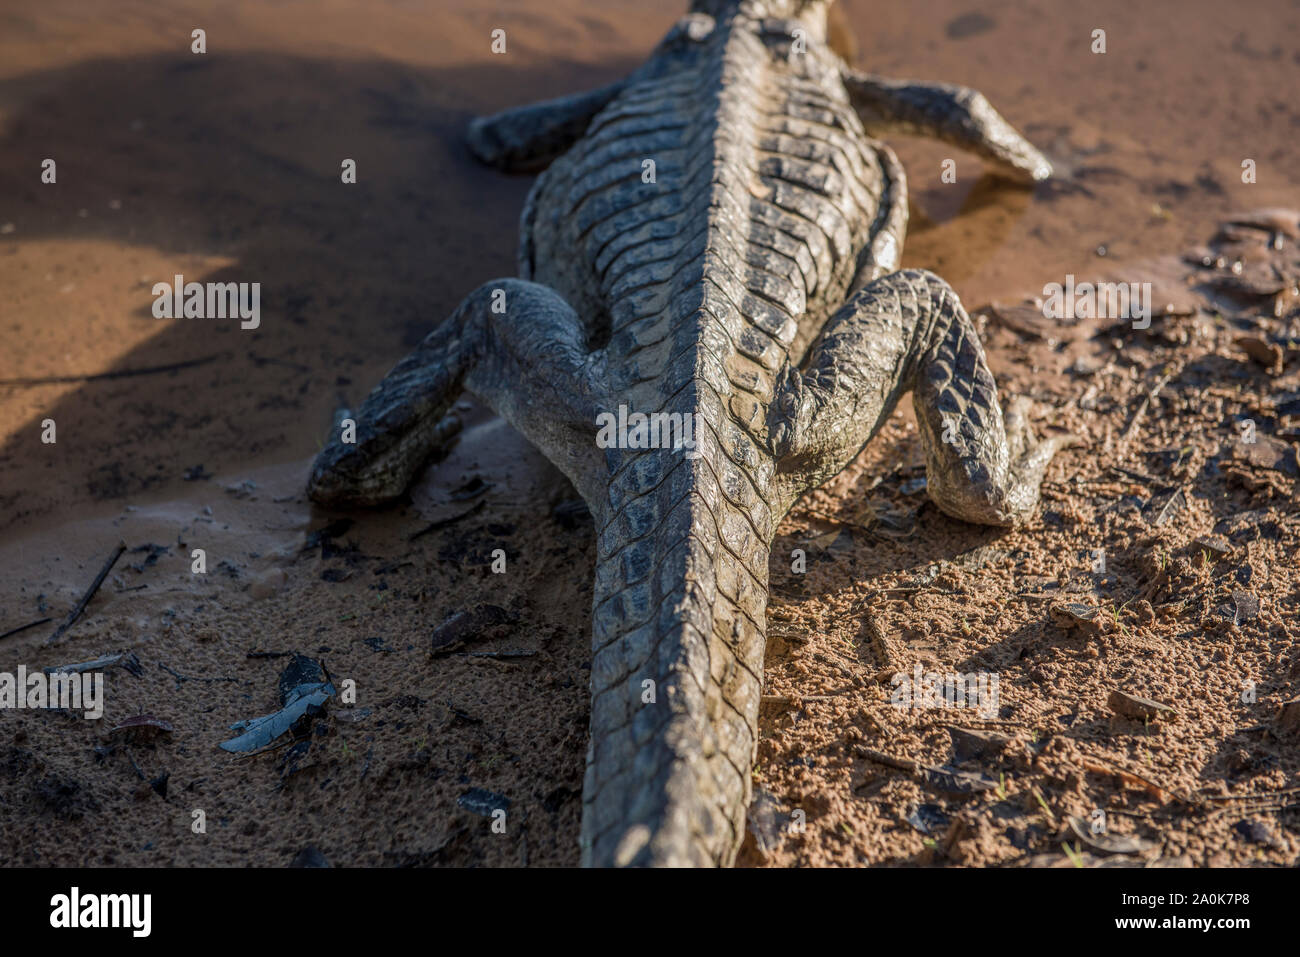 Alligator body rear view Stock Photo